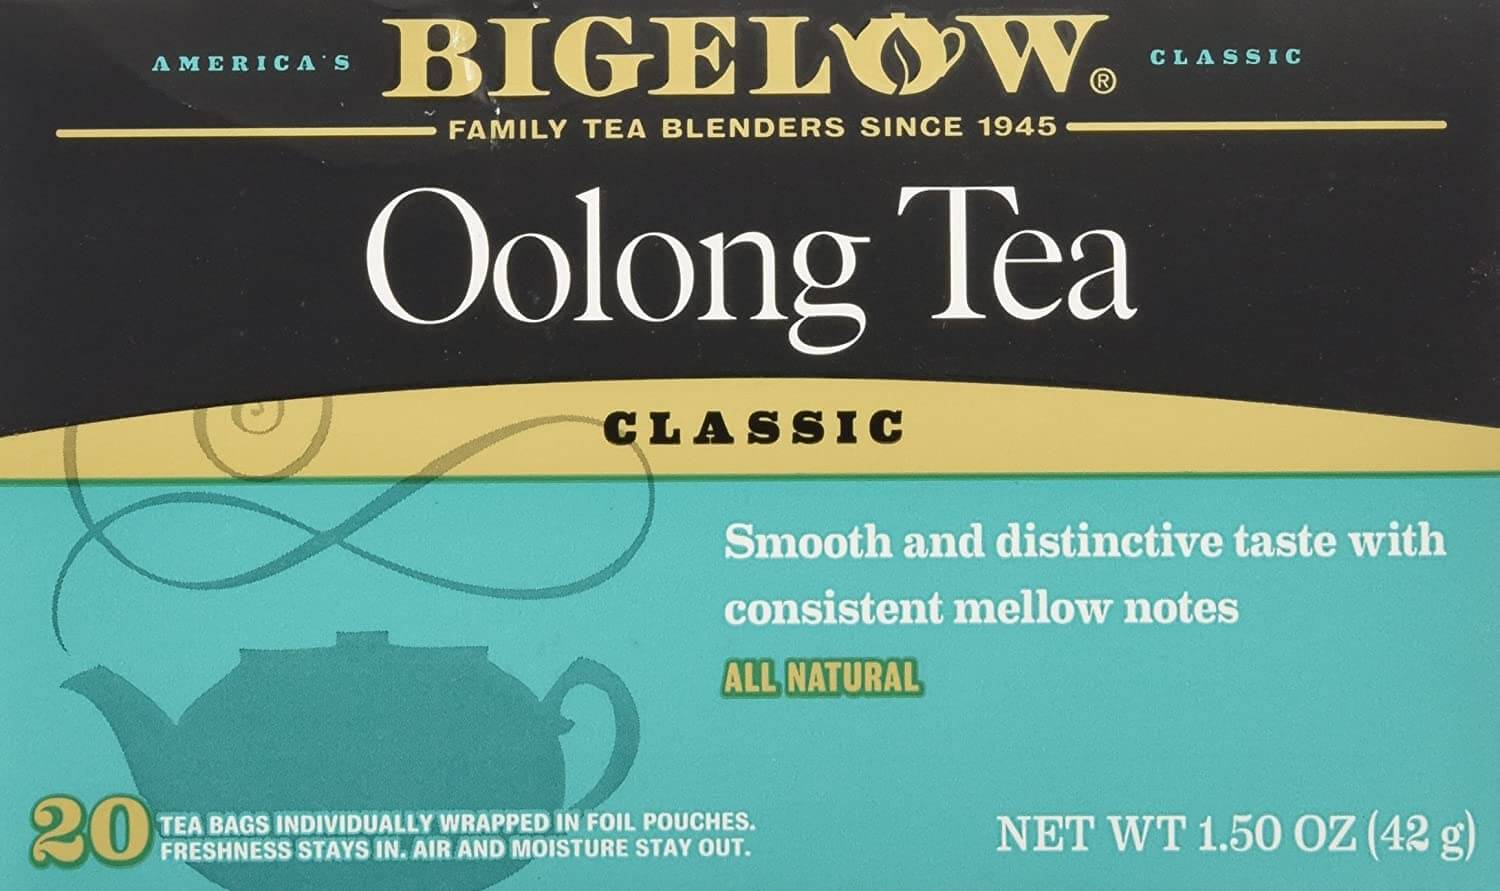 Bigelow Oolong Tea